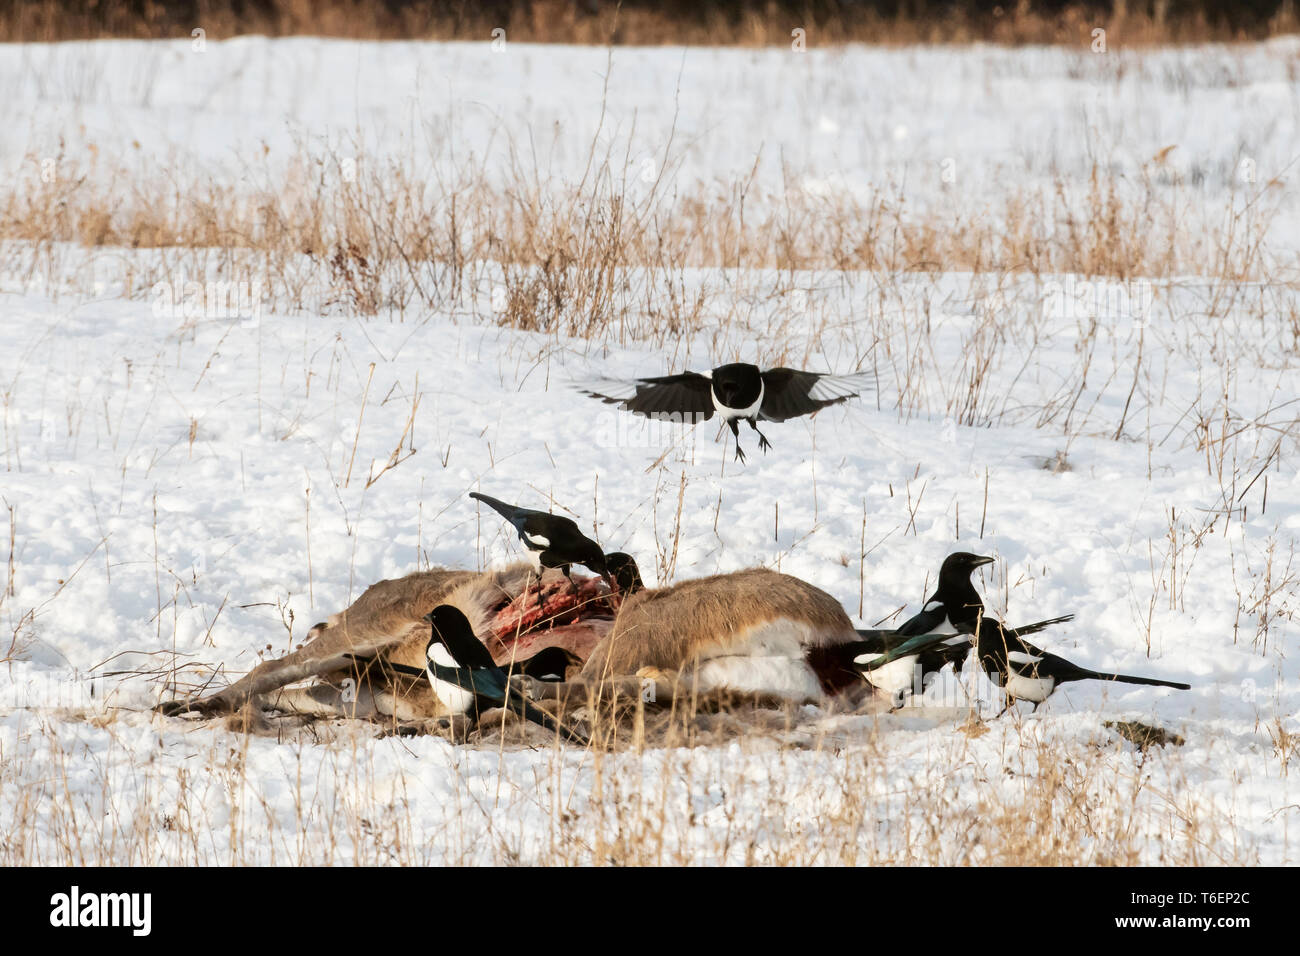 North America; United States; Montana; Wildlife; Birds; Predatory; Black-billed magpie; Pica hudsonia; On whitetailed deer carcass, winter kill. Stock Photo